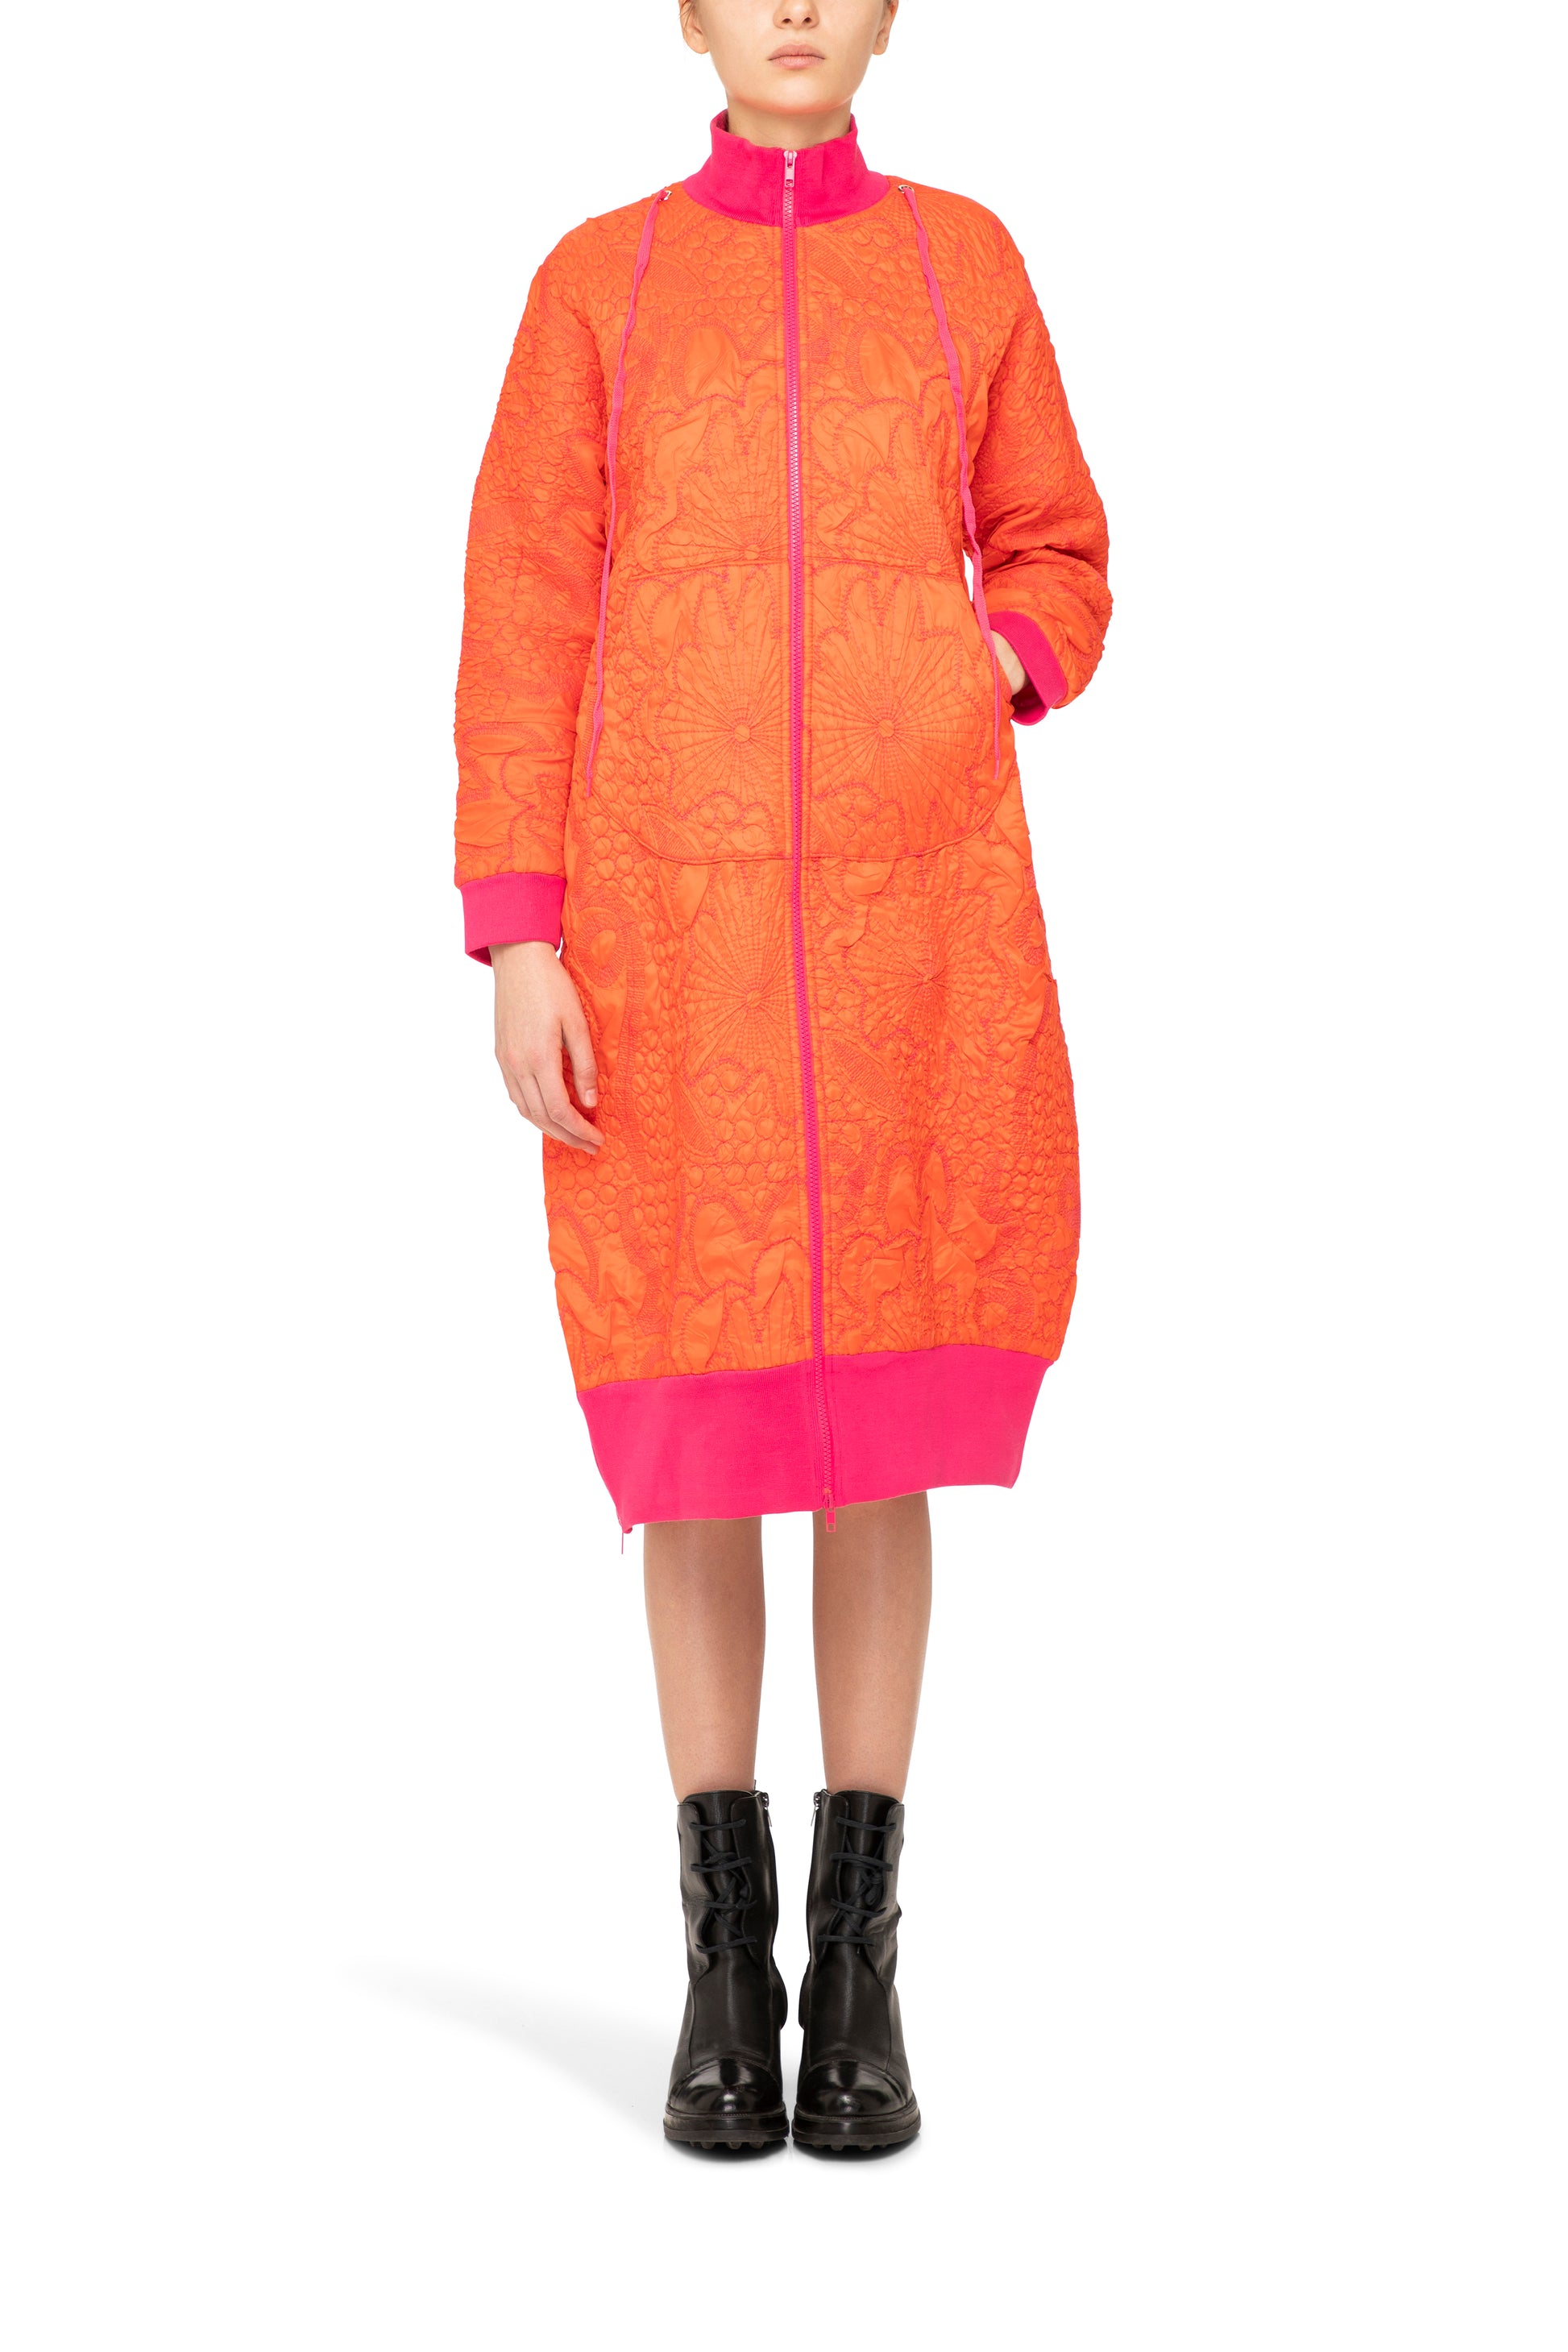 Lampo Coat in Orange Pink, Orange coat, Orange and Pink coat, padded coat, embroidered coat, fashion coat, designer coat, bright coat, unique coat